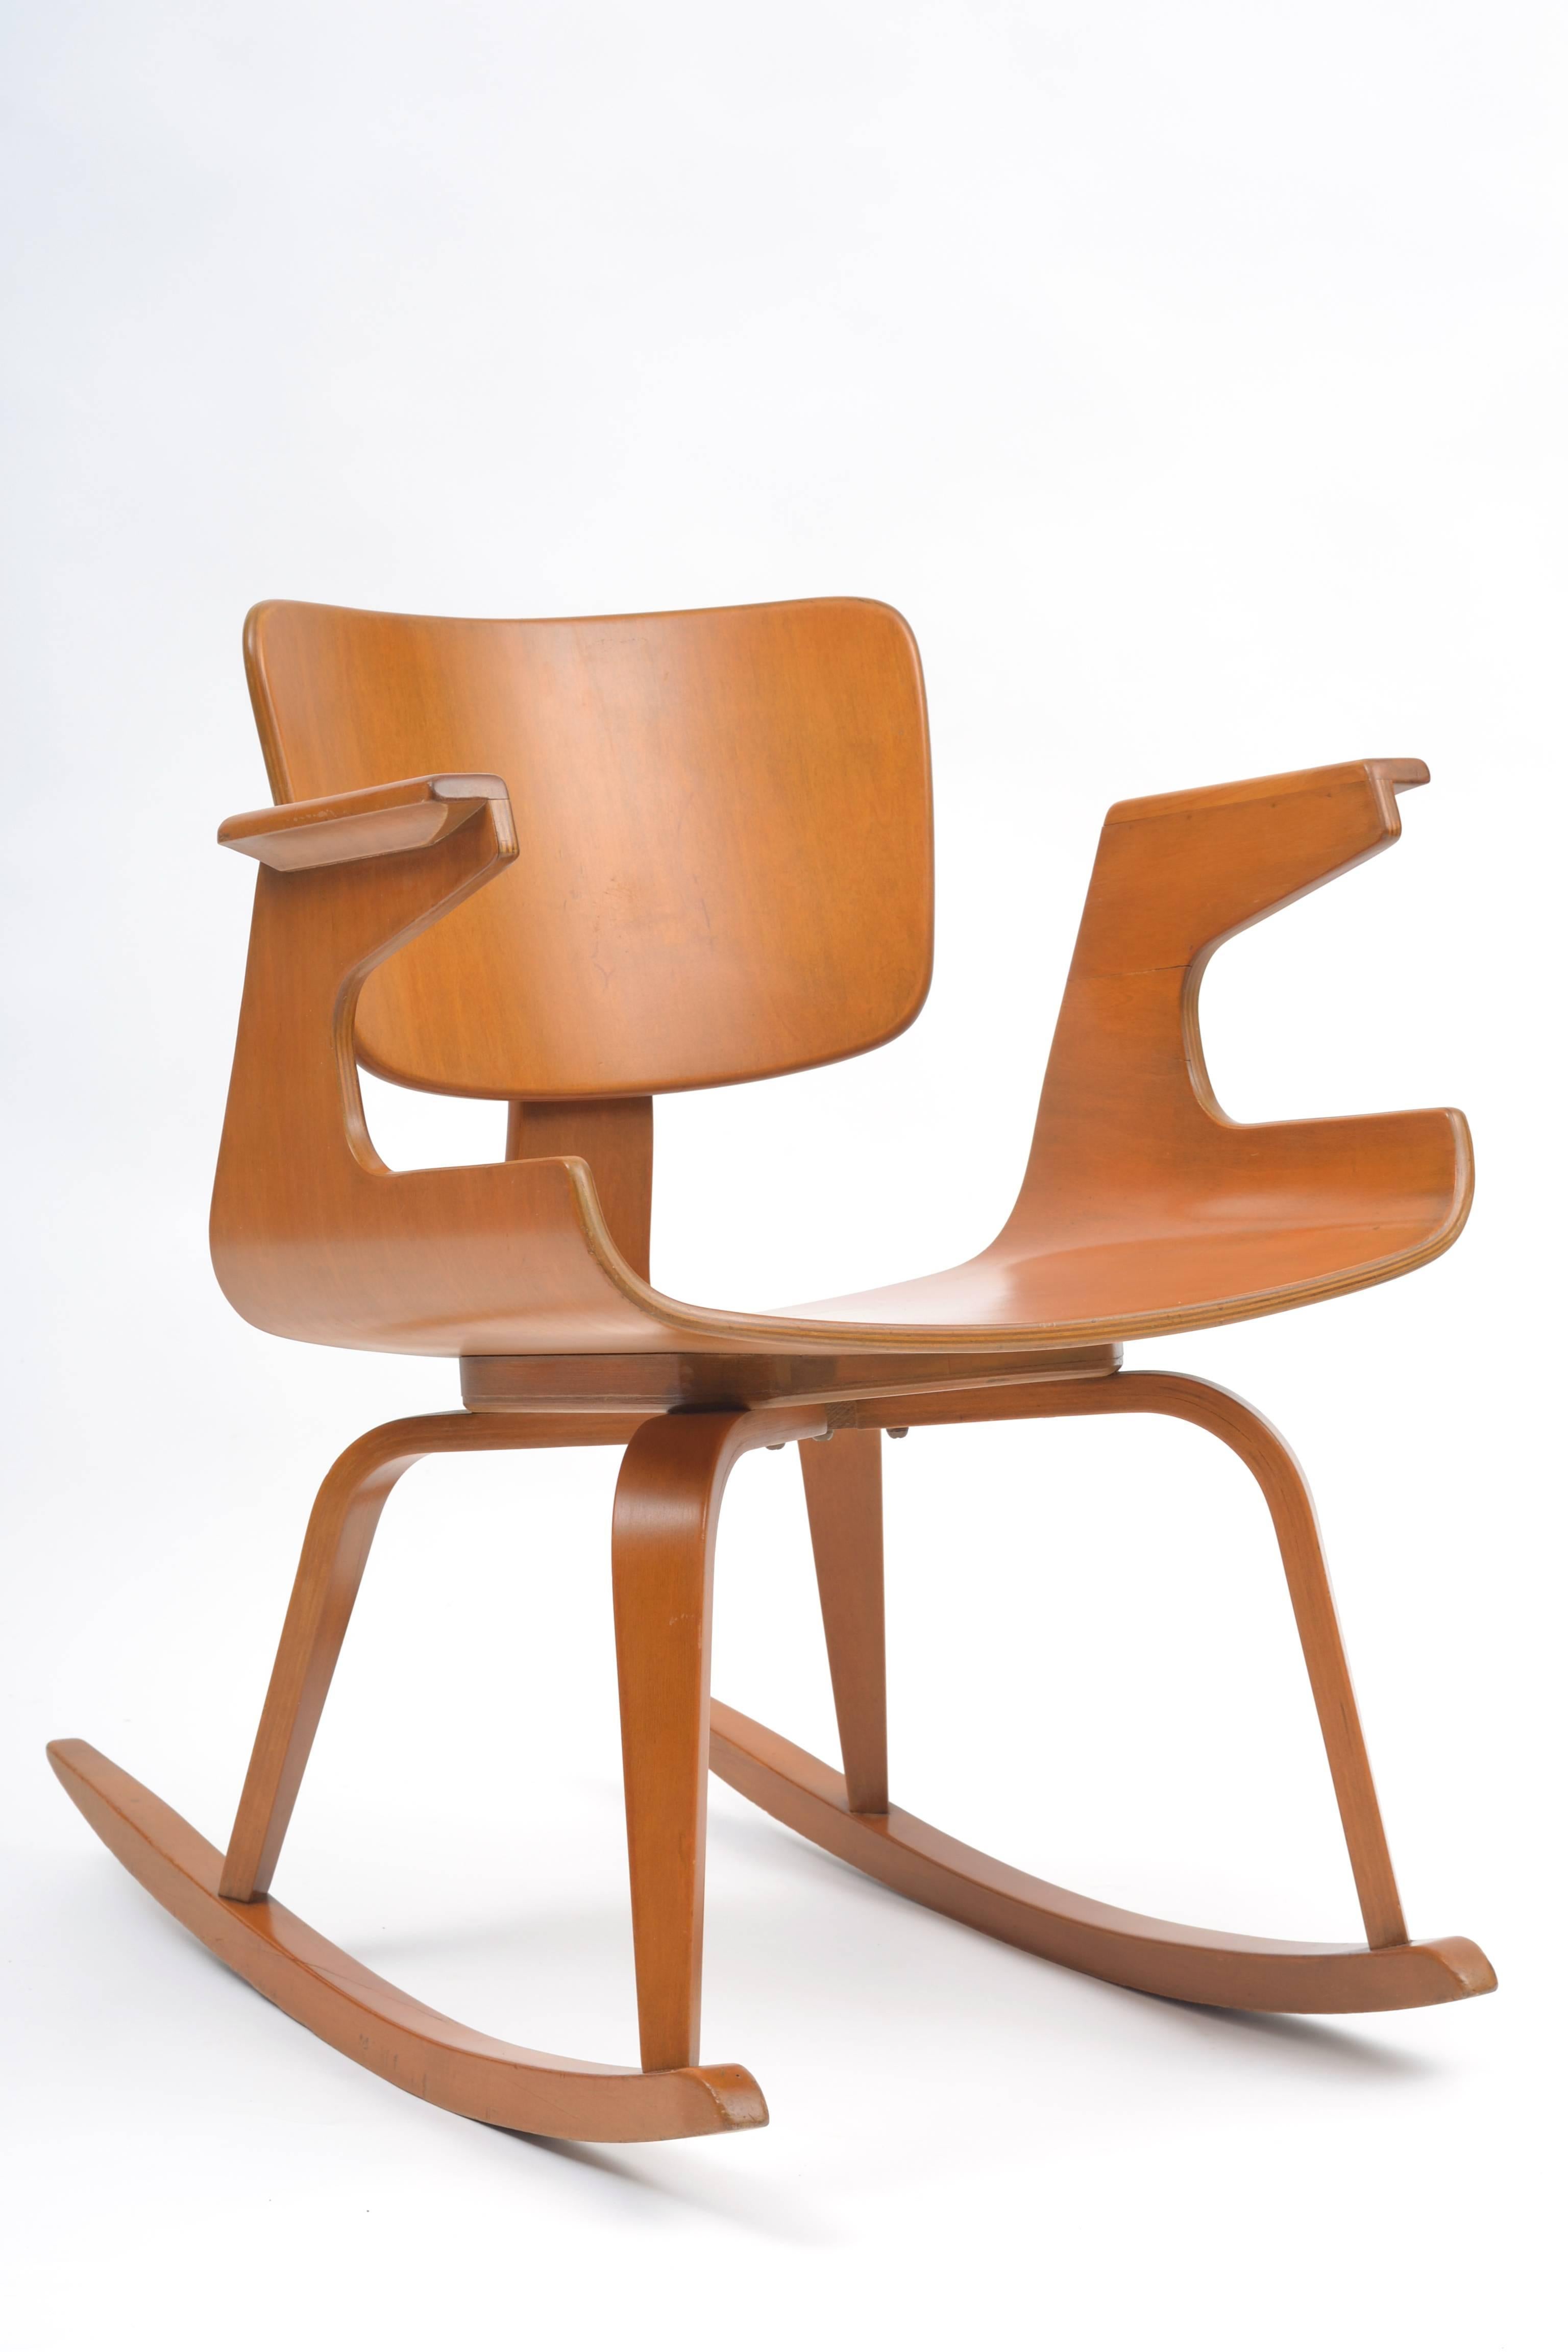 Rare 1950s Thonet Plywood Rocking Chairs 3